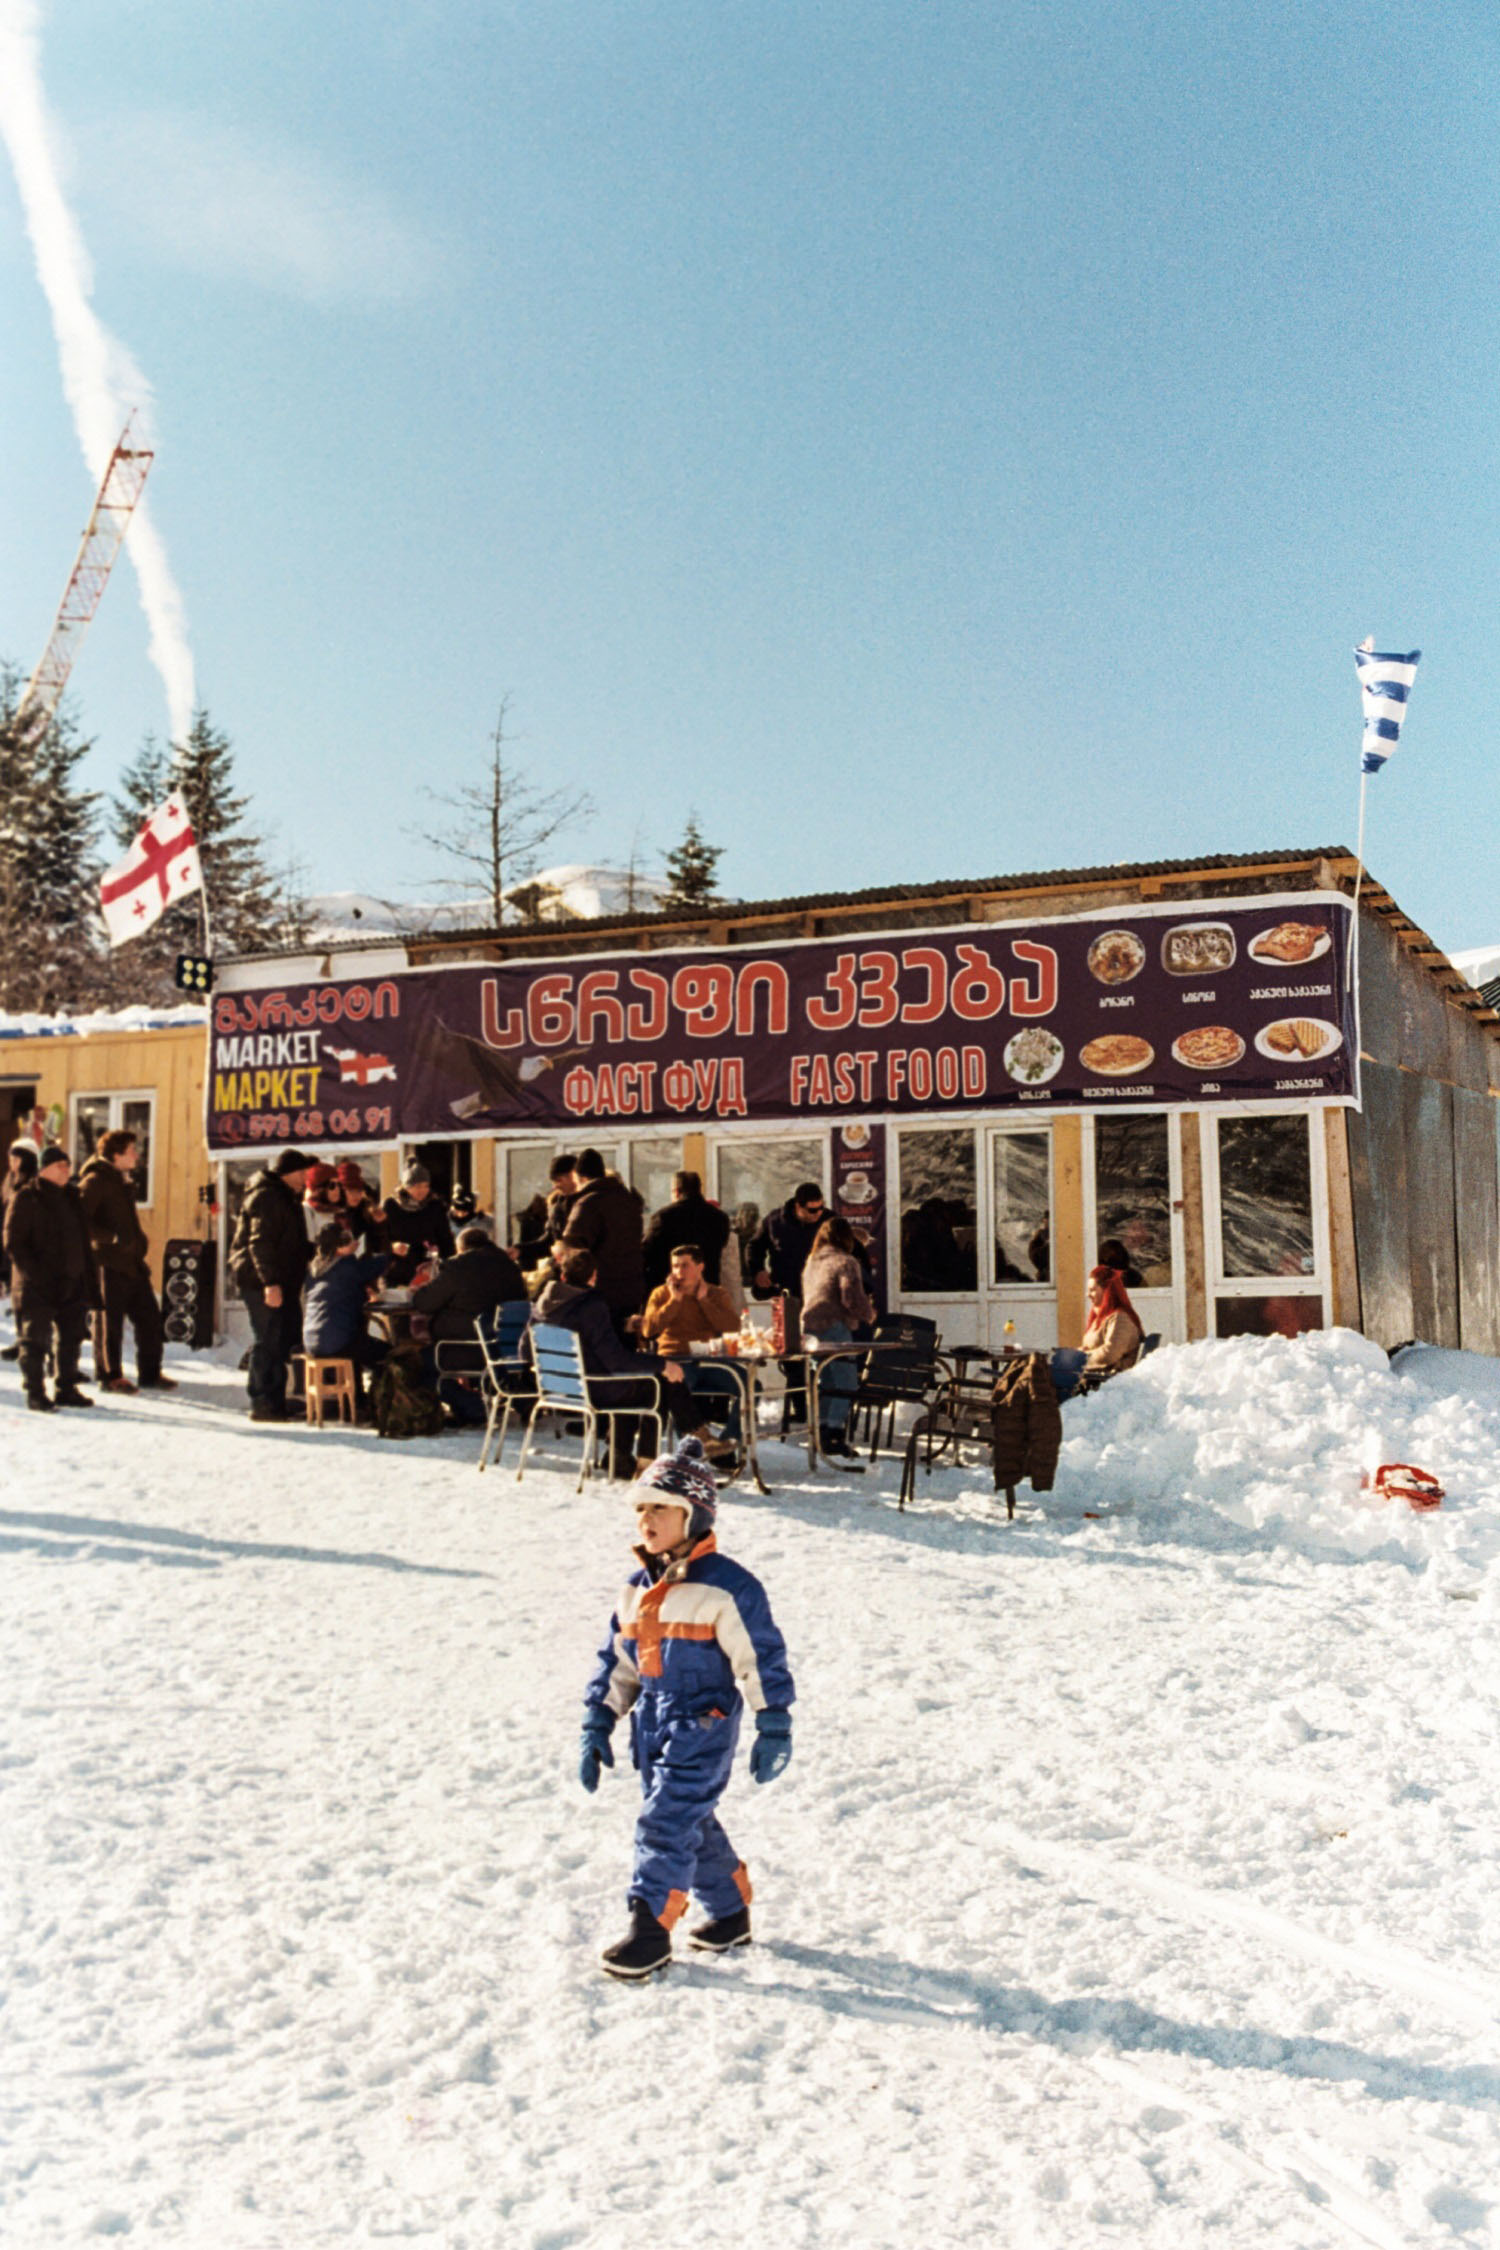 Visitors crowd around Fast Food, a restaurant at the base of Goderdzi ski resort